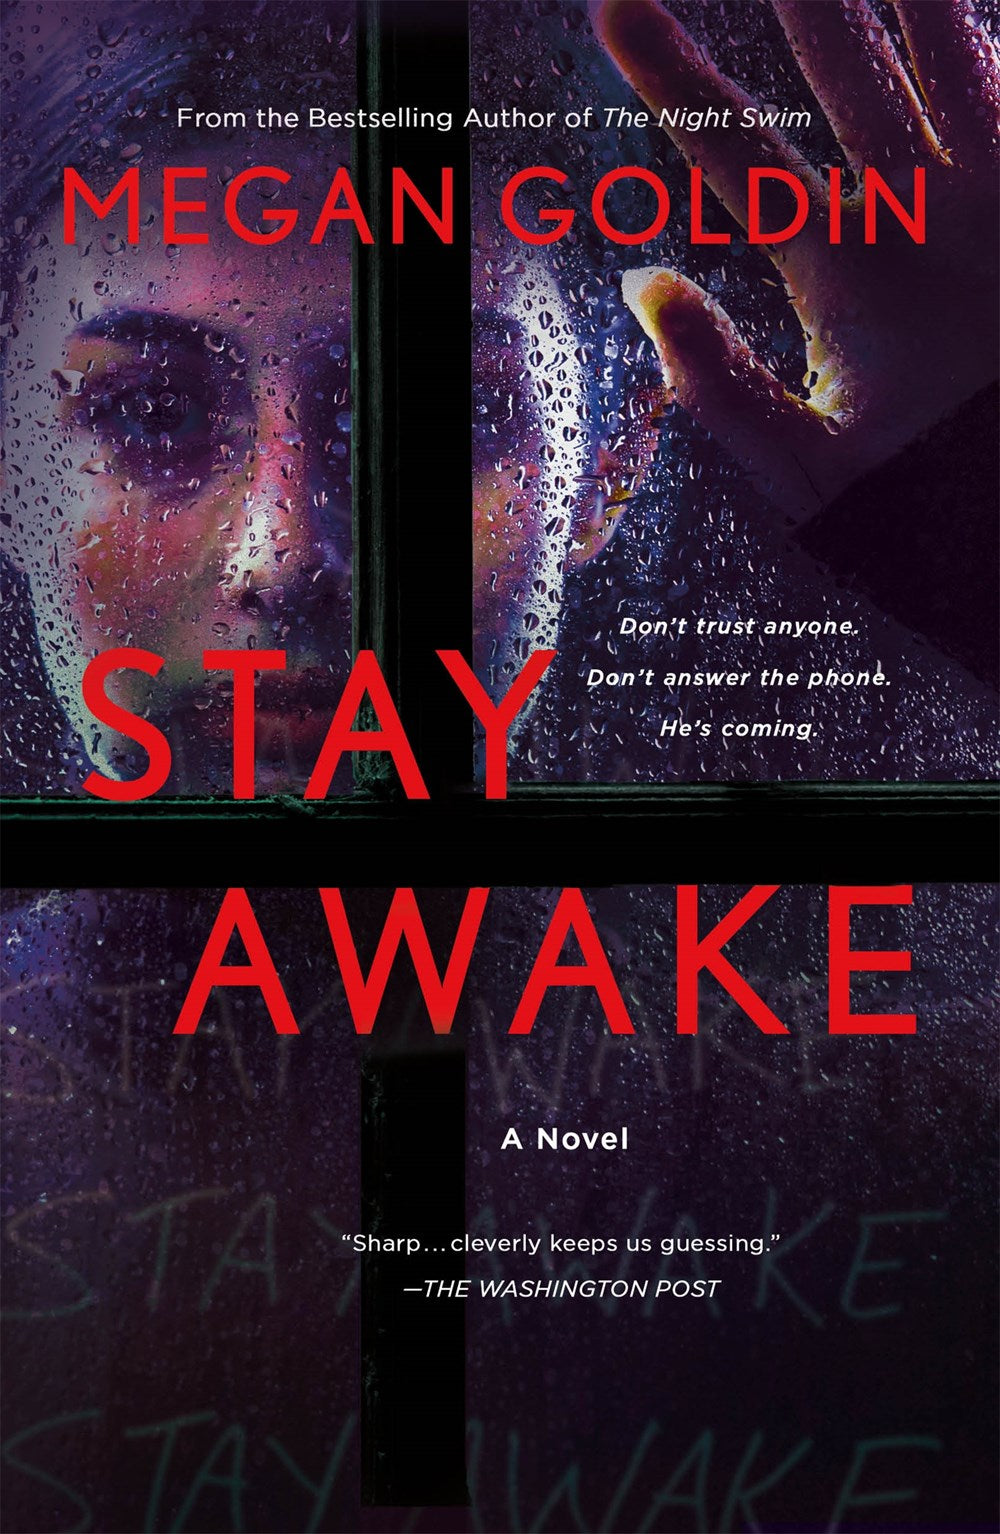 Stay Awake - Megan Goldin